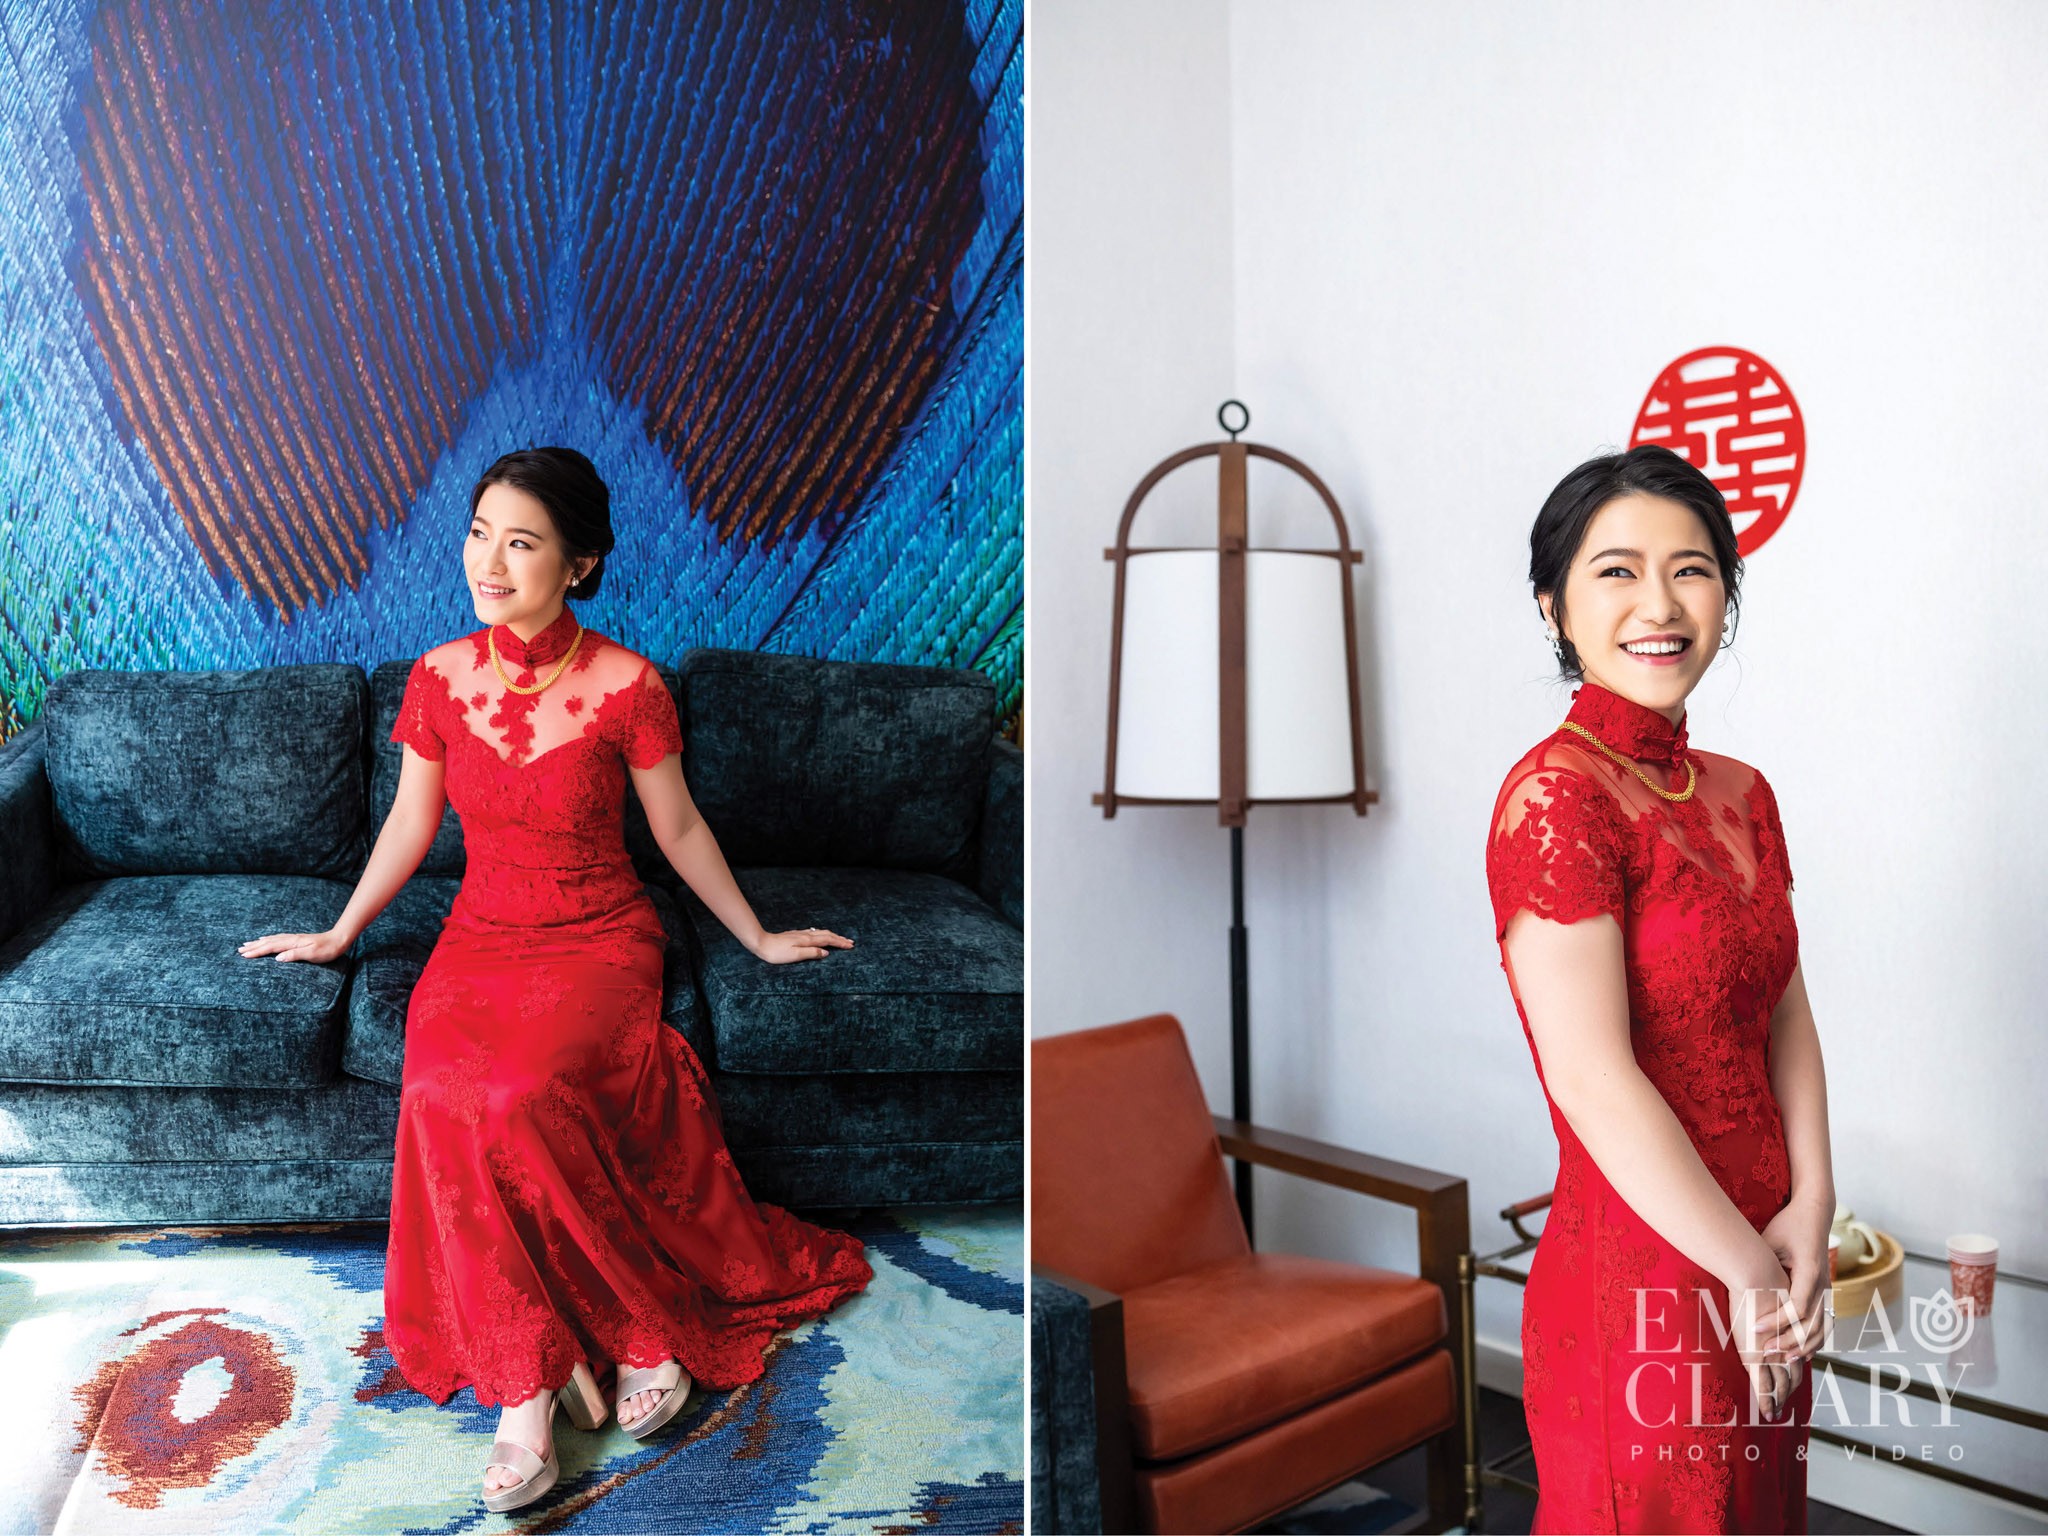 Chinese Bride portrait